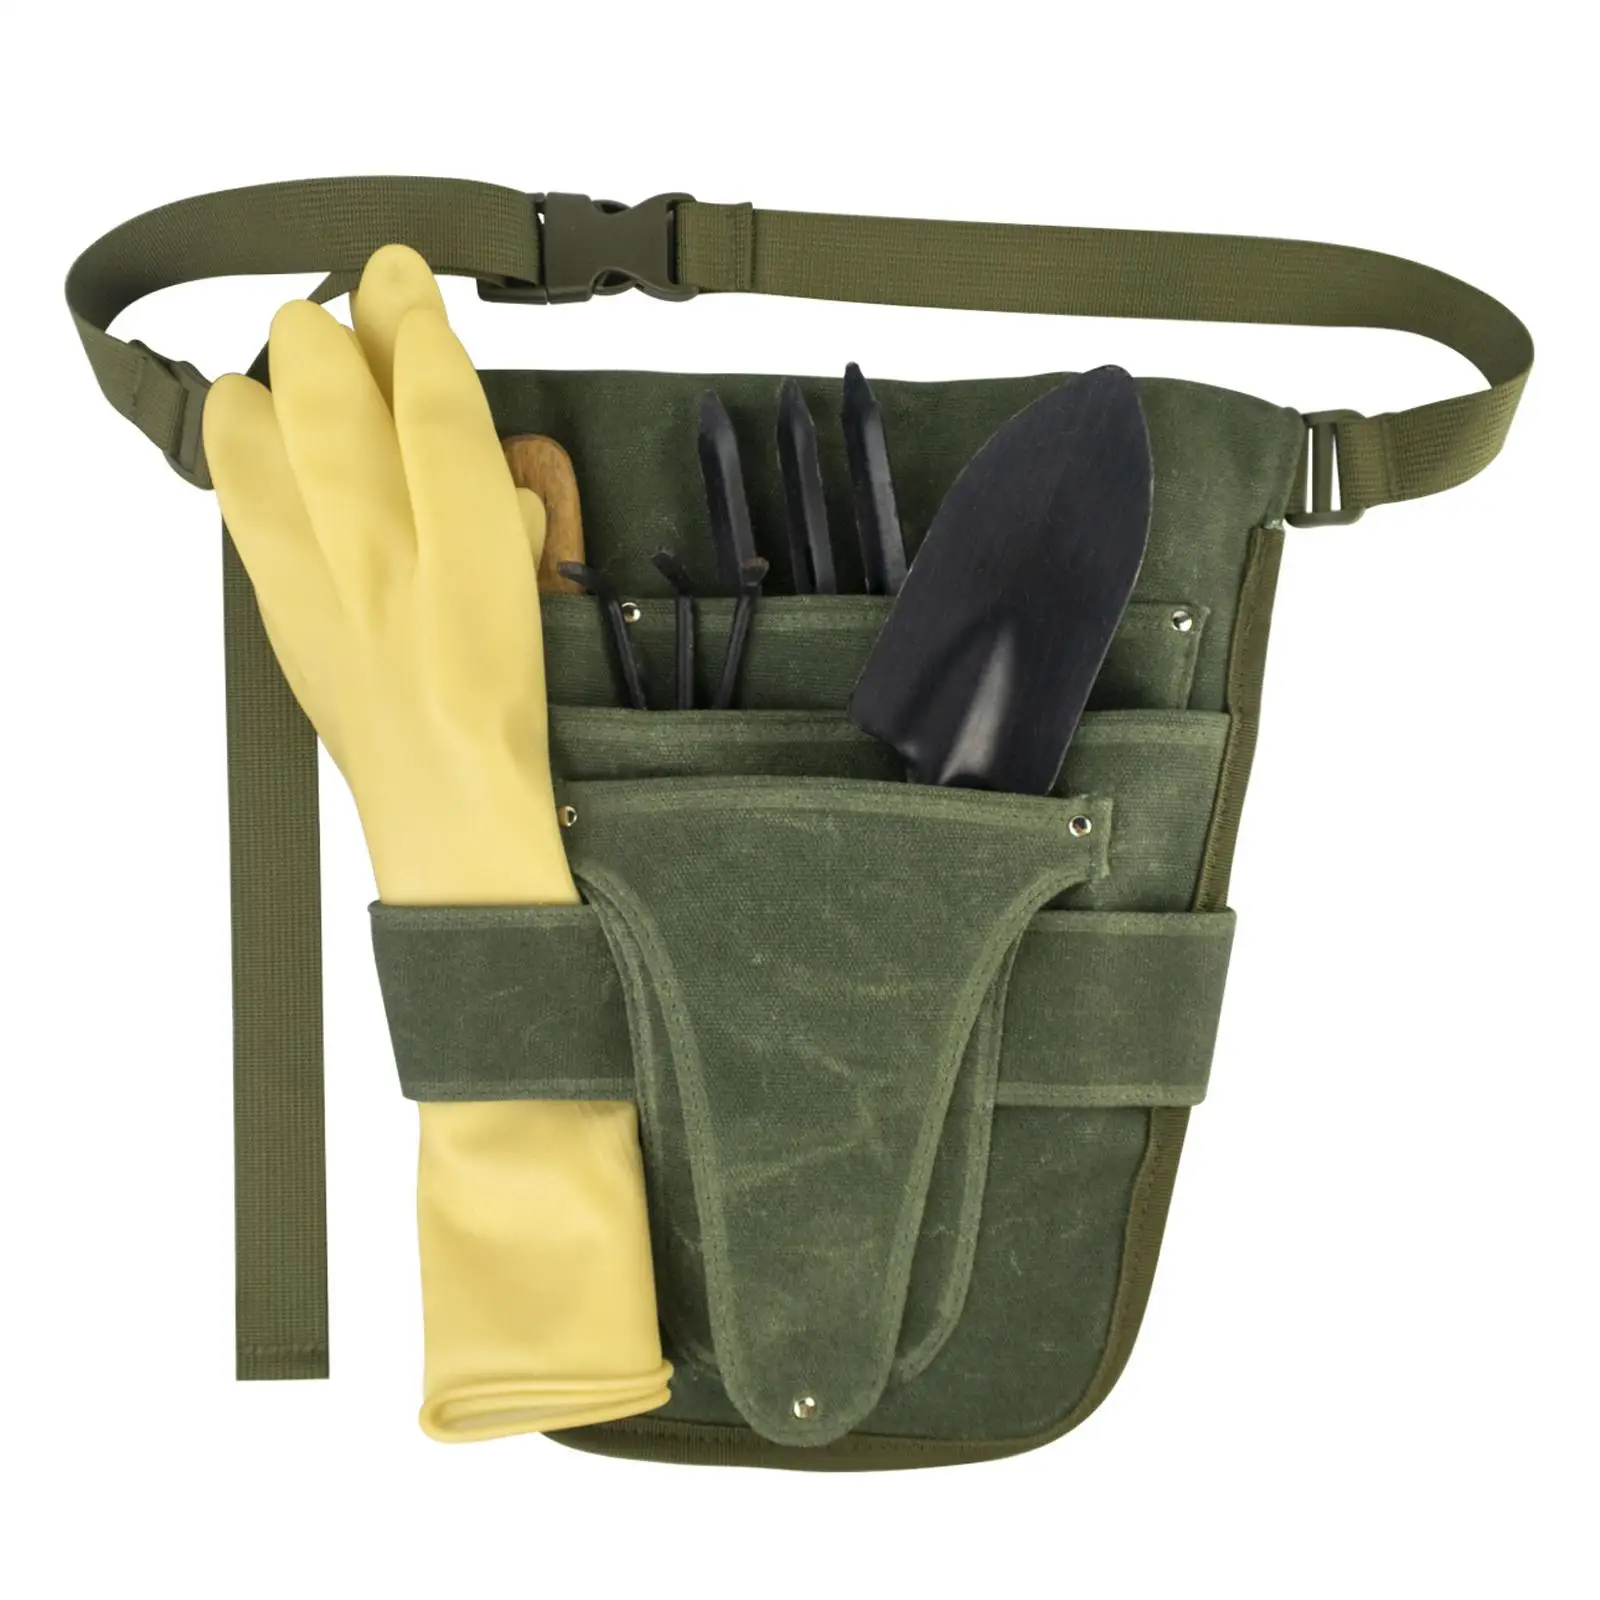 Handy Garden Tool Belt, with Multiple Pocket Heavy Duty Small Tool Belt Pouch Outdoor Gardening Tools Waist Belt for Gardeners